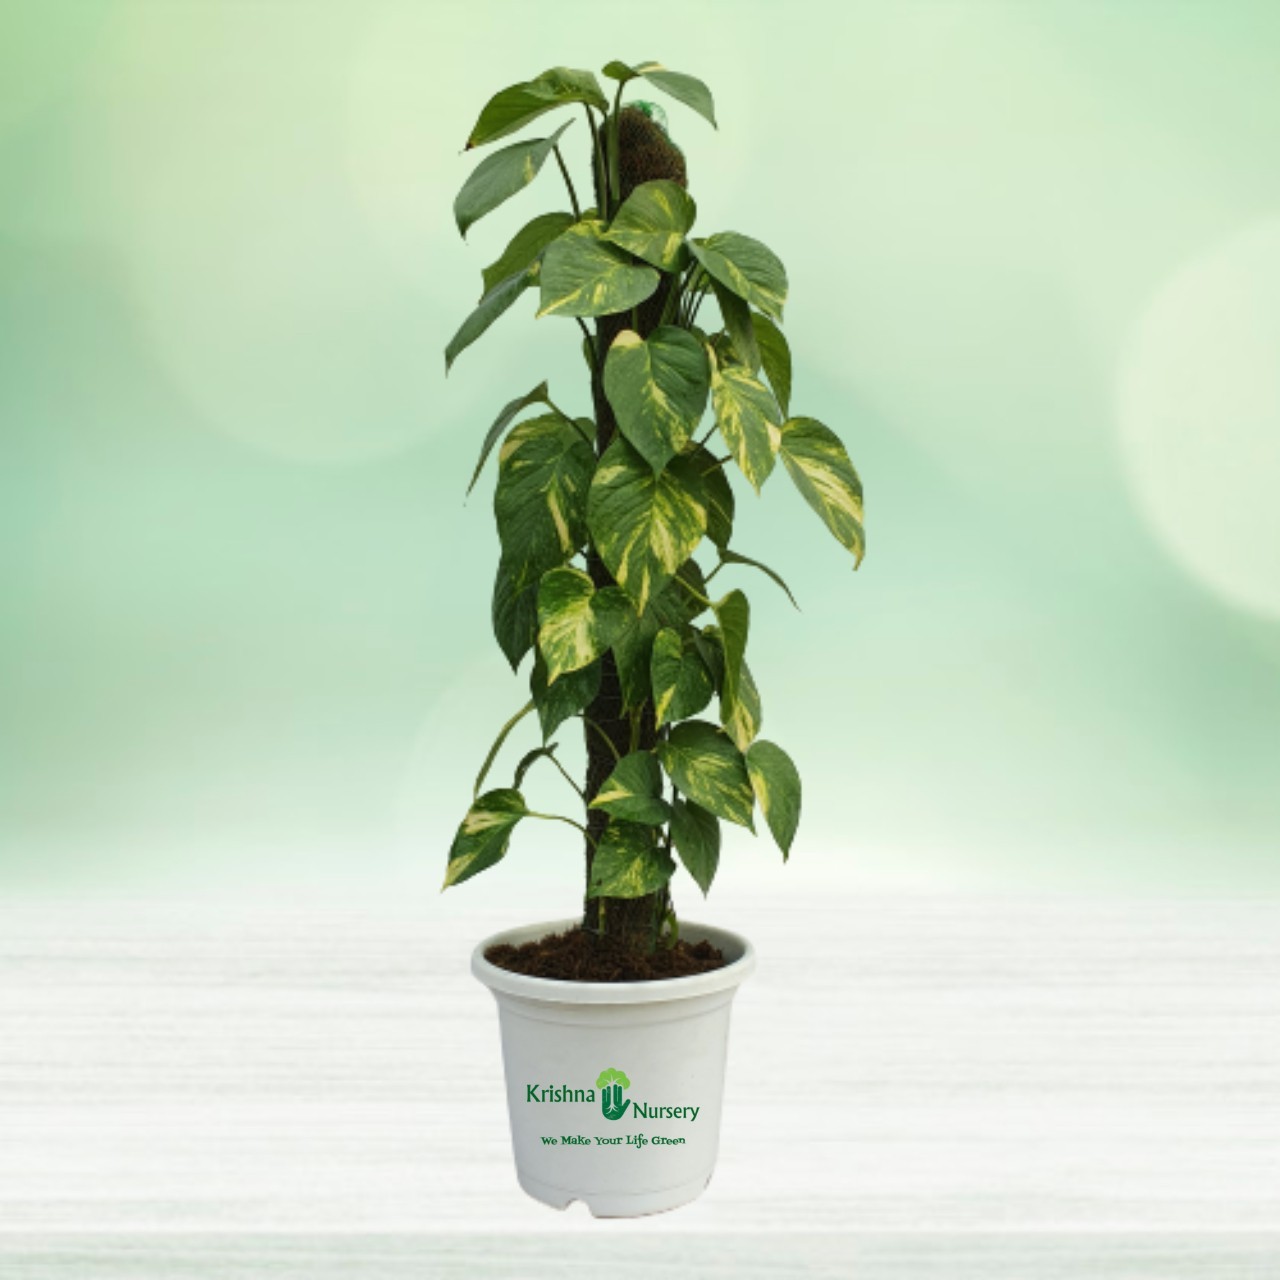 Green Money Plant - 10 Inch - White Pot